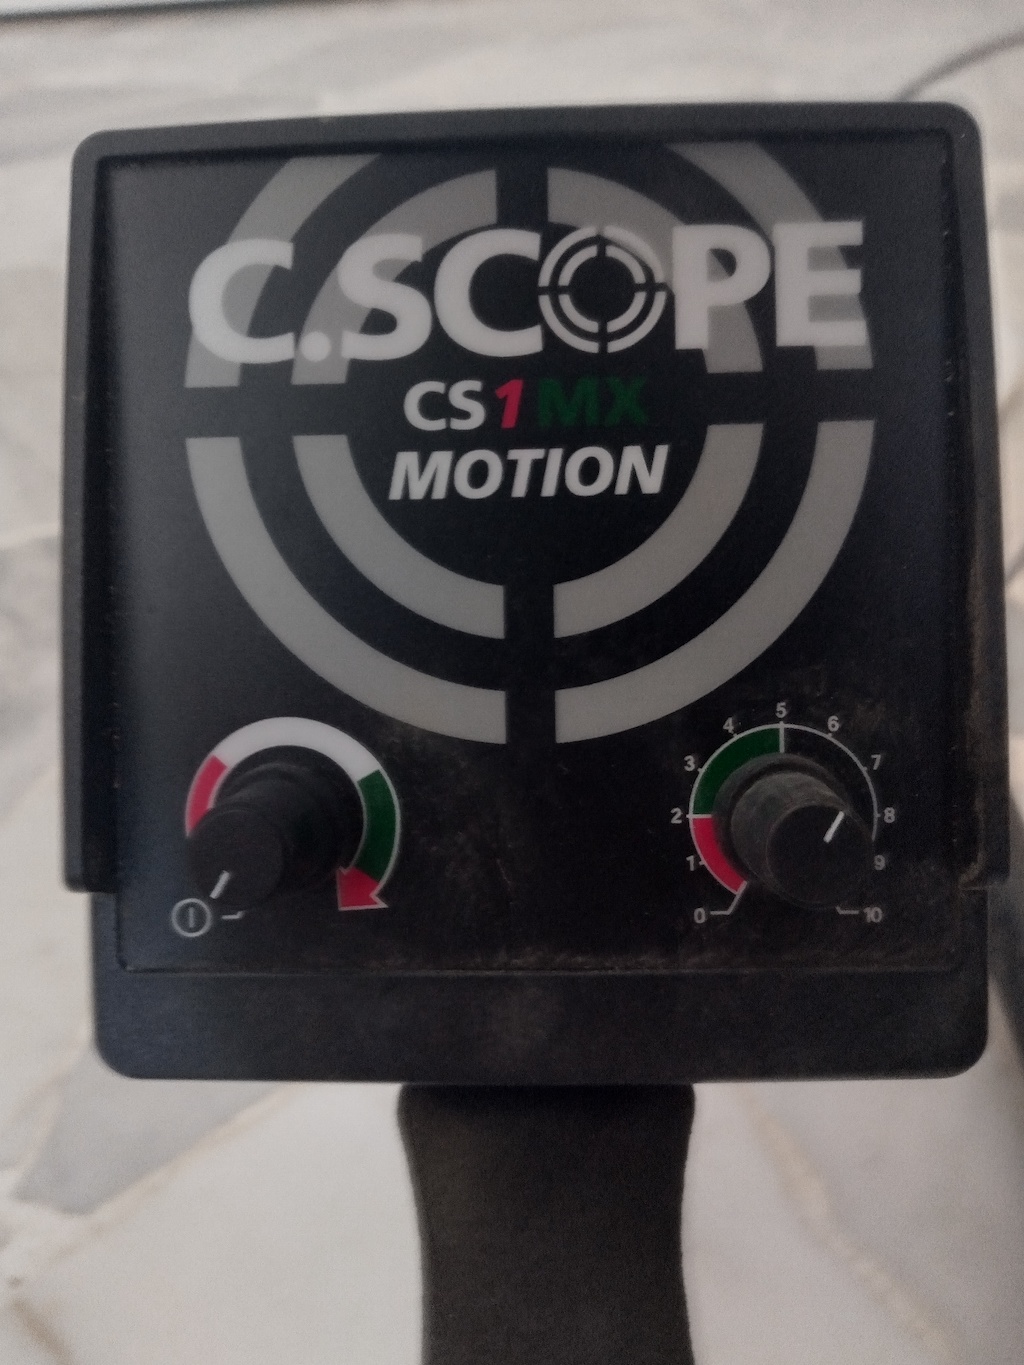 C-SCOPE CS1MX